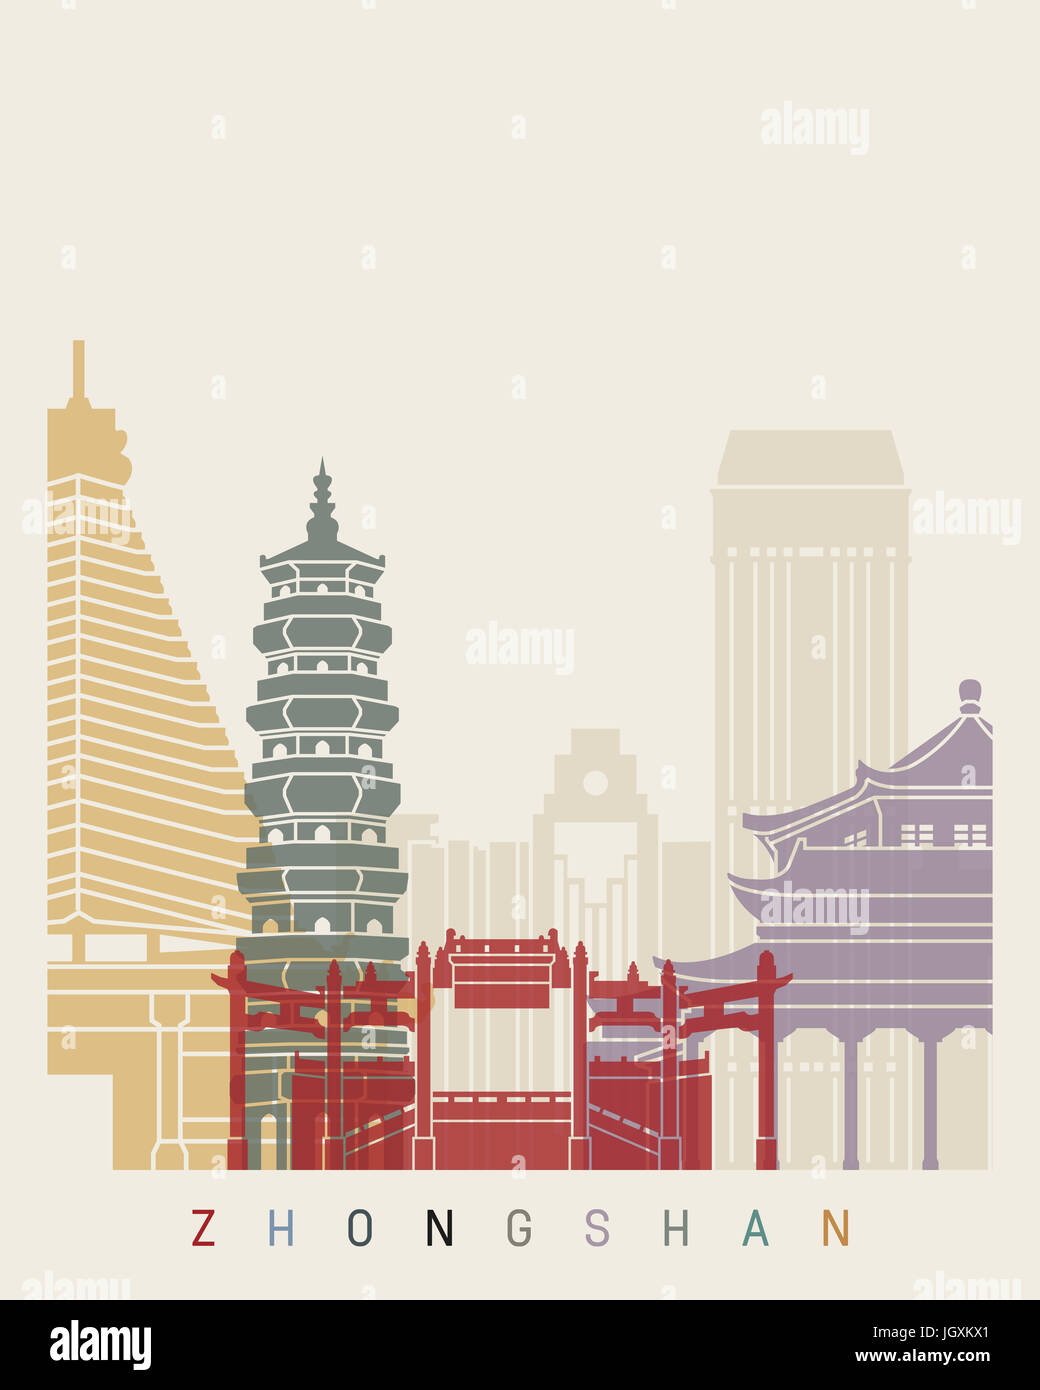 Zhongshan skyline poster in editable vector file Stock Photo